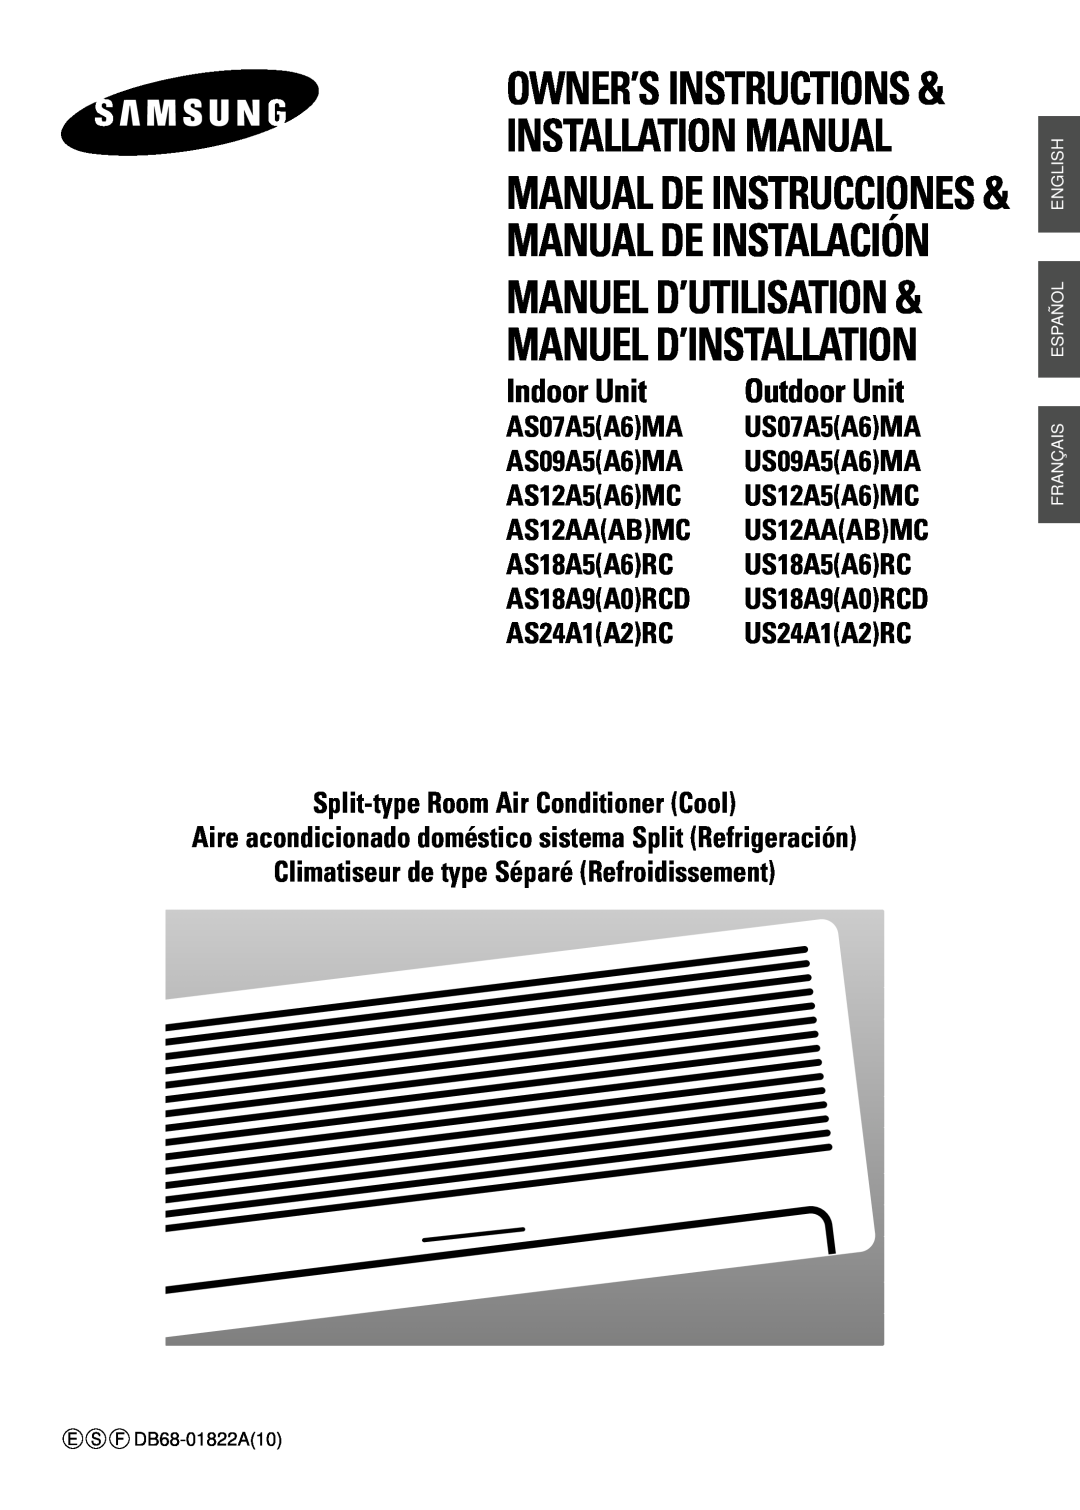 Samsung US12A5(A6)MC, US12AA(AB)MC installation manual Owner’S Instructions & Installation Manual, Indoor Unit 